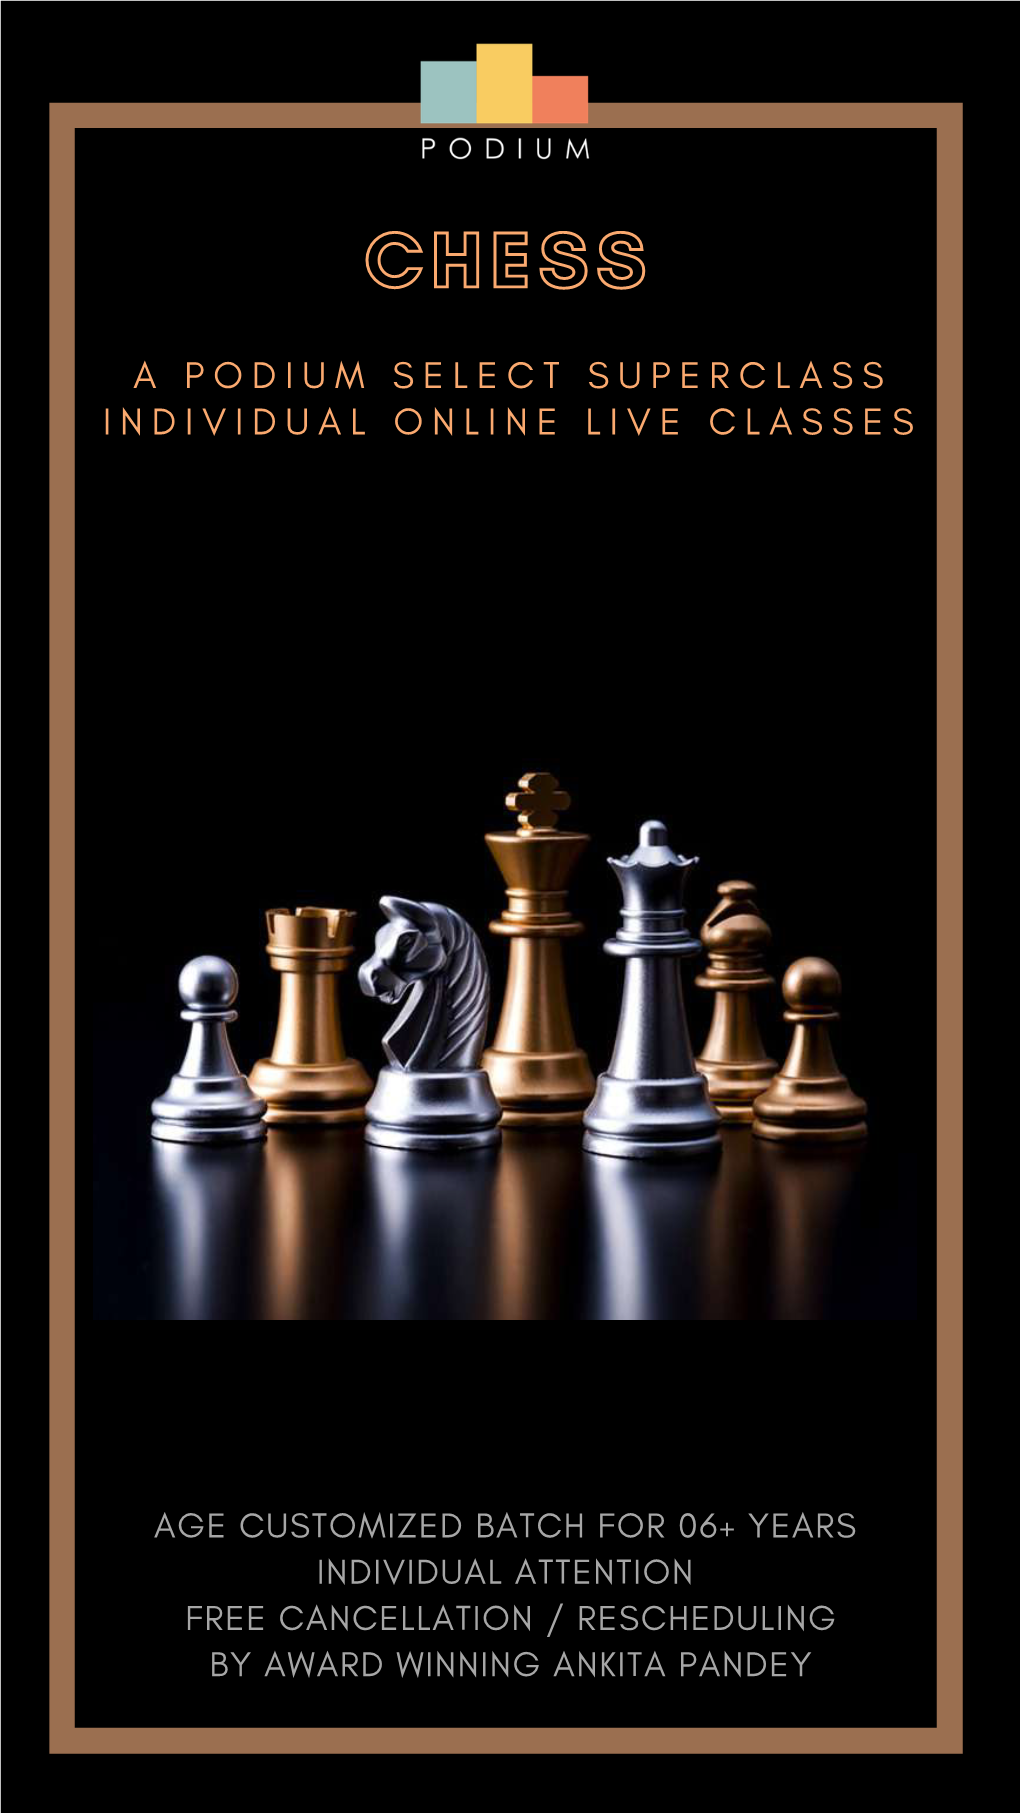 A Podium Select Superclass Individual Online Live Classes